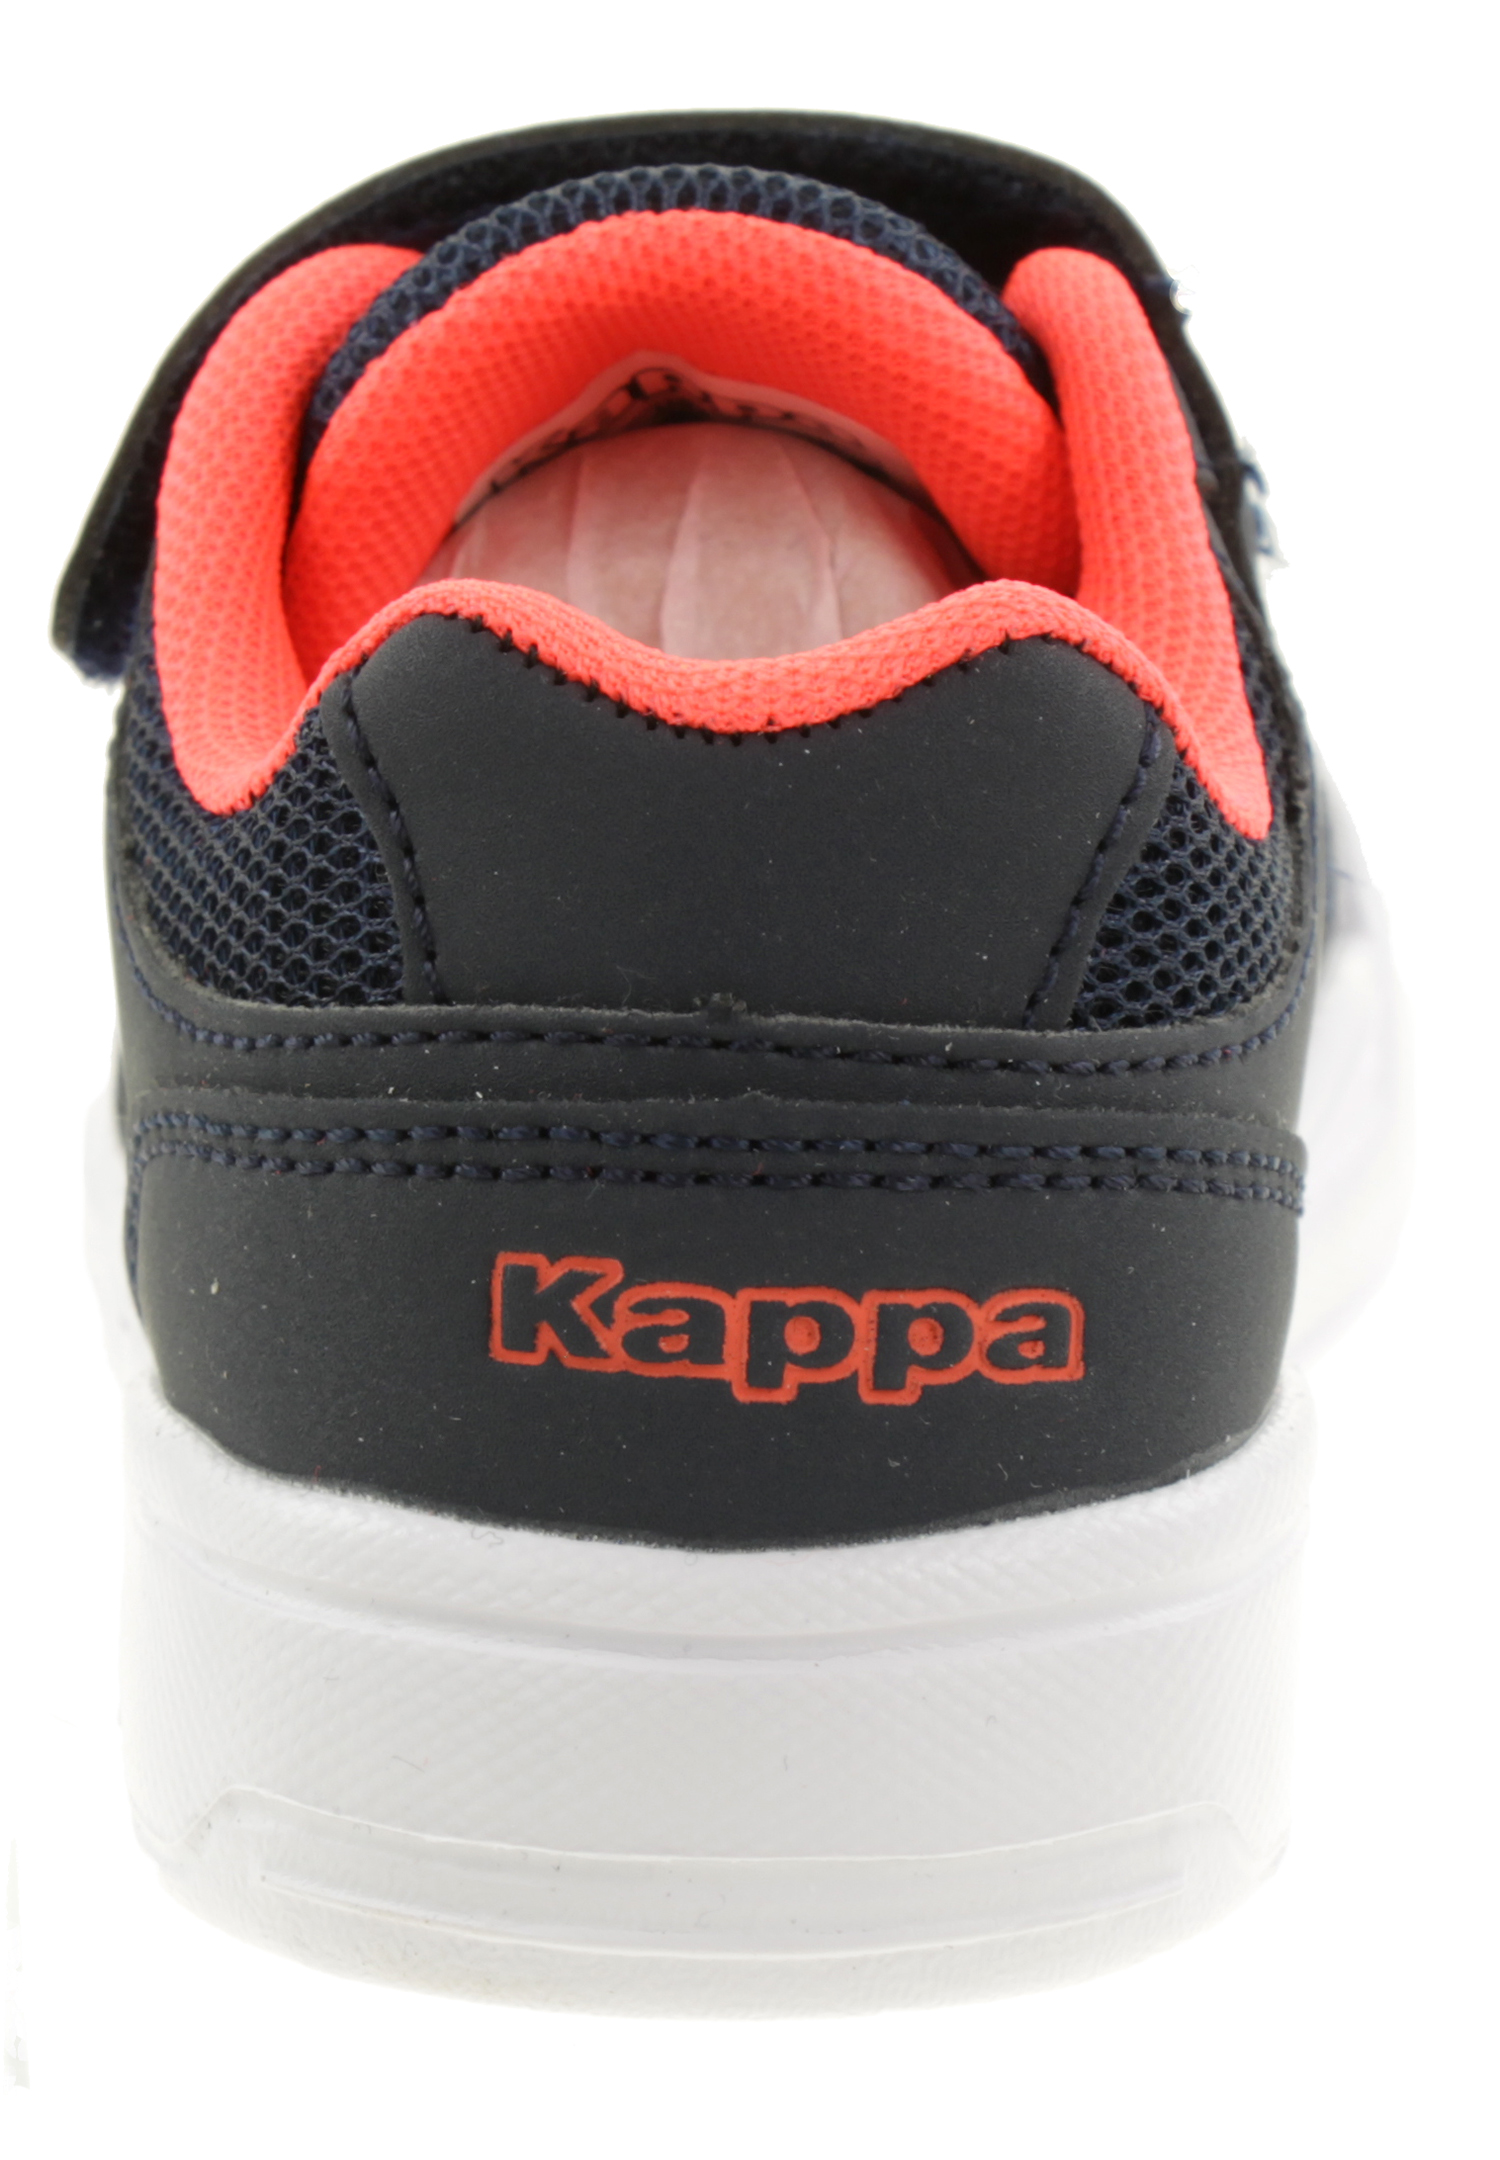 Kappa Unisex Kinder Sneaker Turnschuh 260779 blau